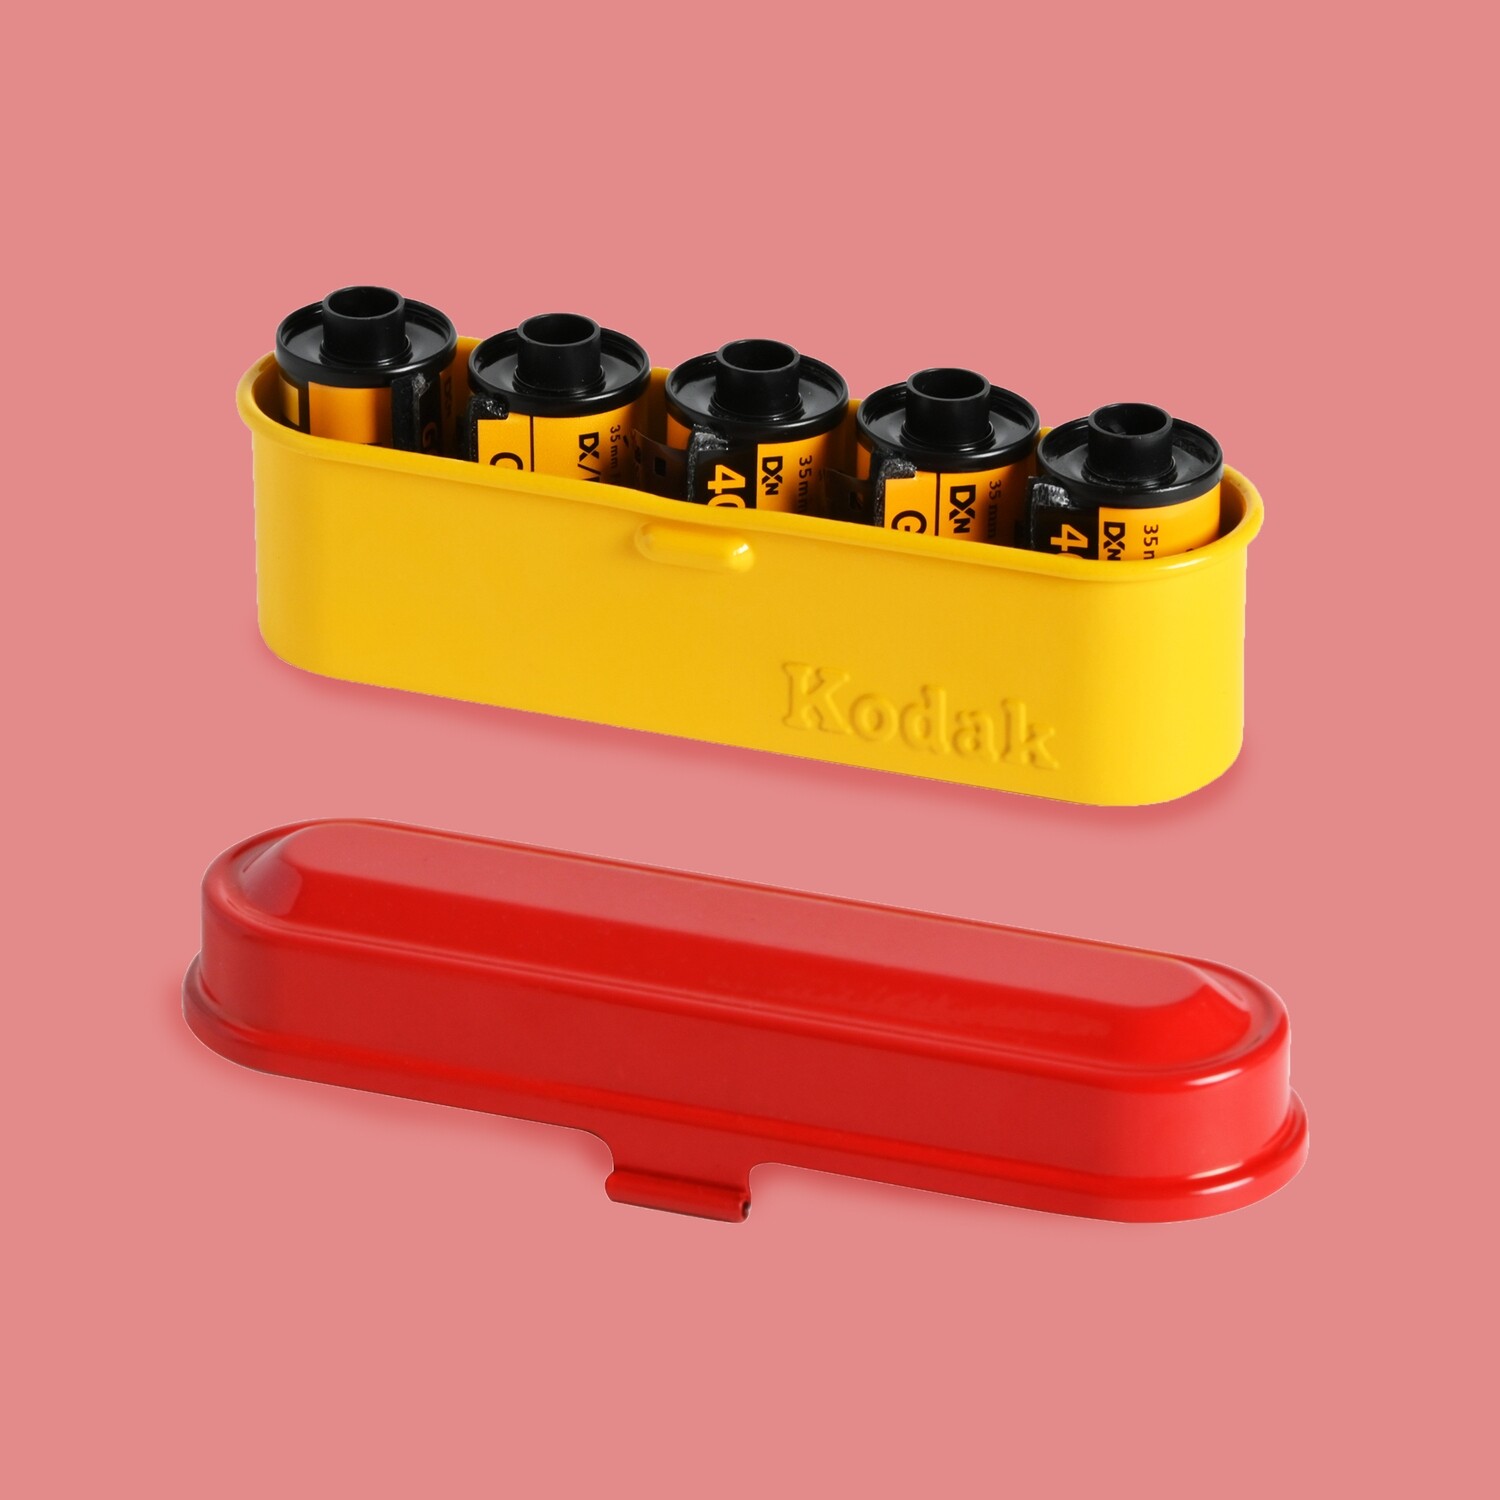 Kodak Film Case - Small